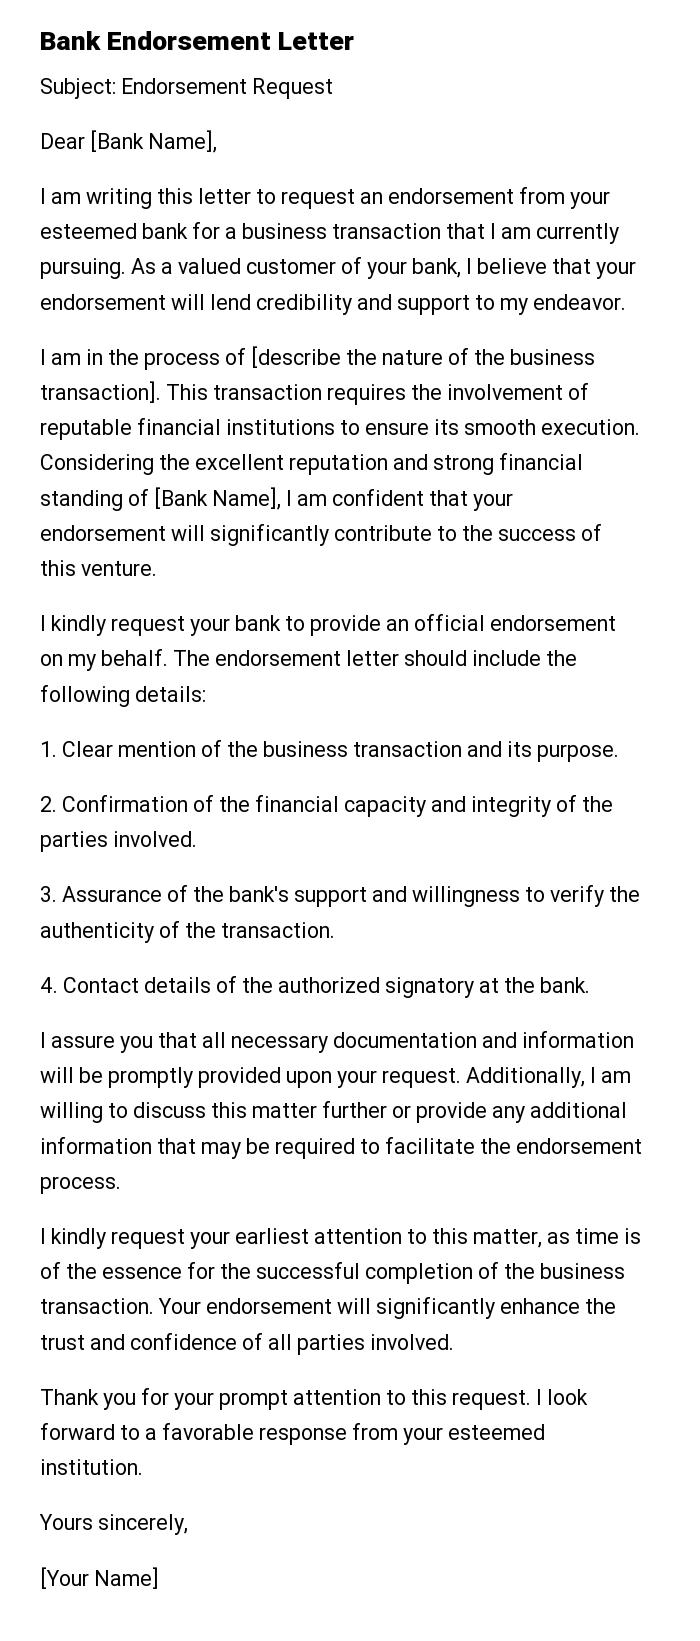 Bank Endorsement Letter